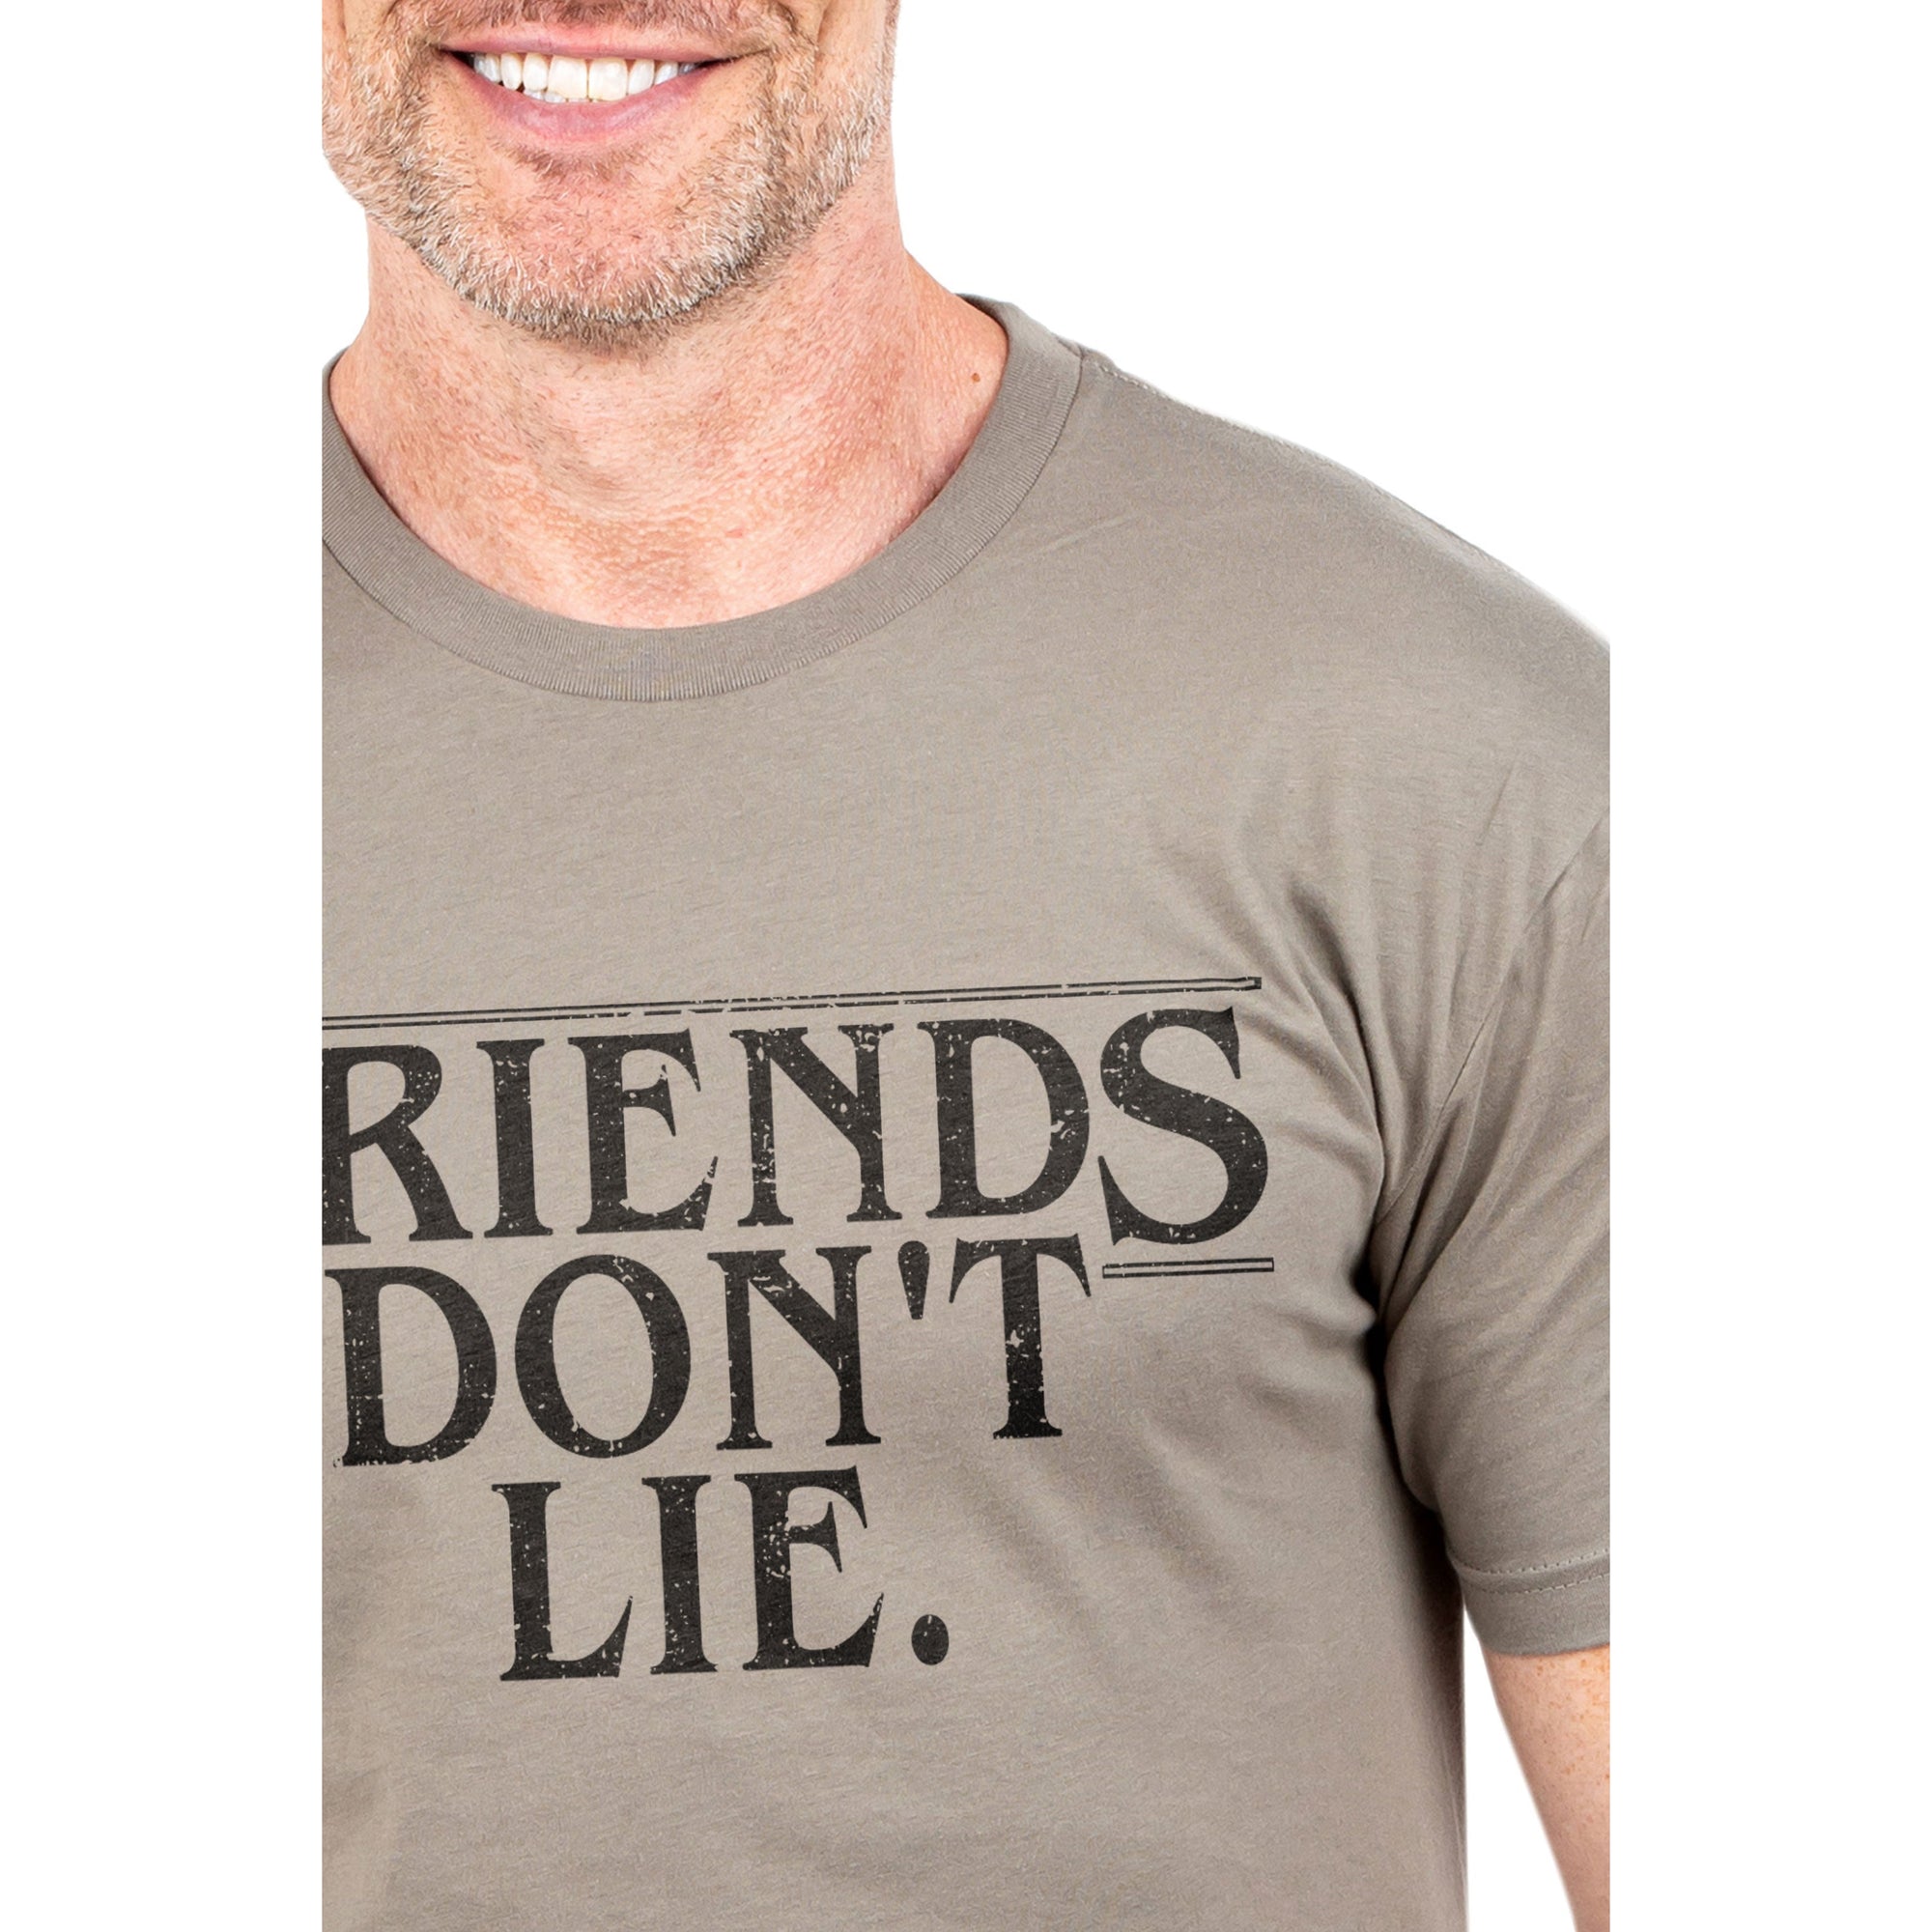 Friends Dont Lie Printed Graphic Men's Crew T-Shirt Heather Tan Closeup Image